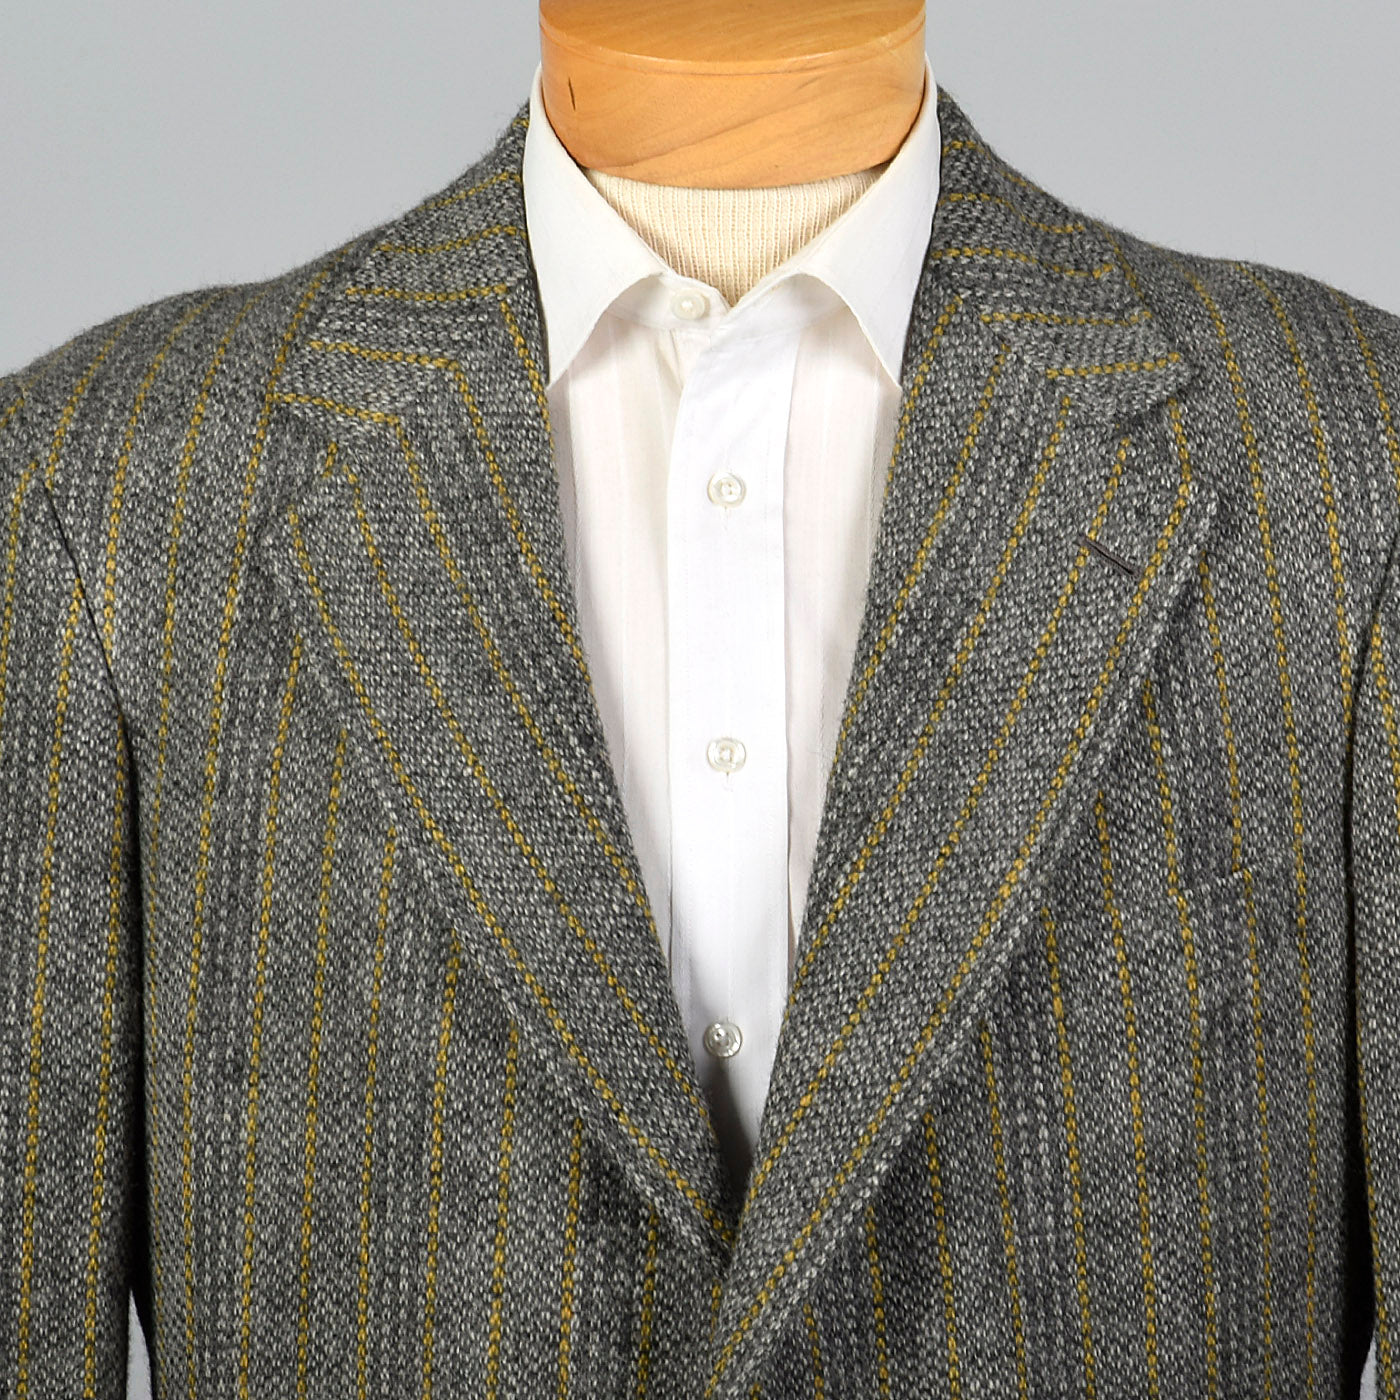 1970s Mens Brooks Brothers Bespoke Gray Tweed Jacket